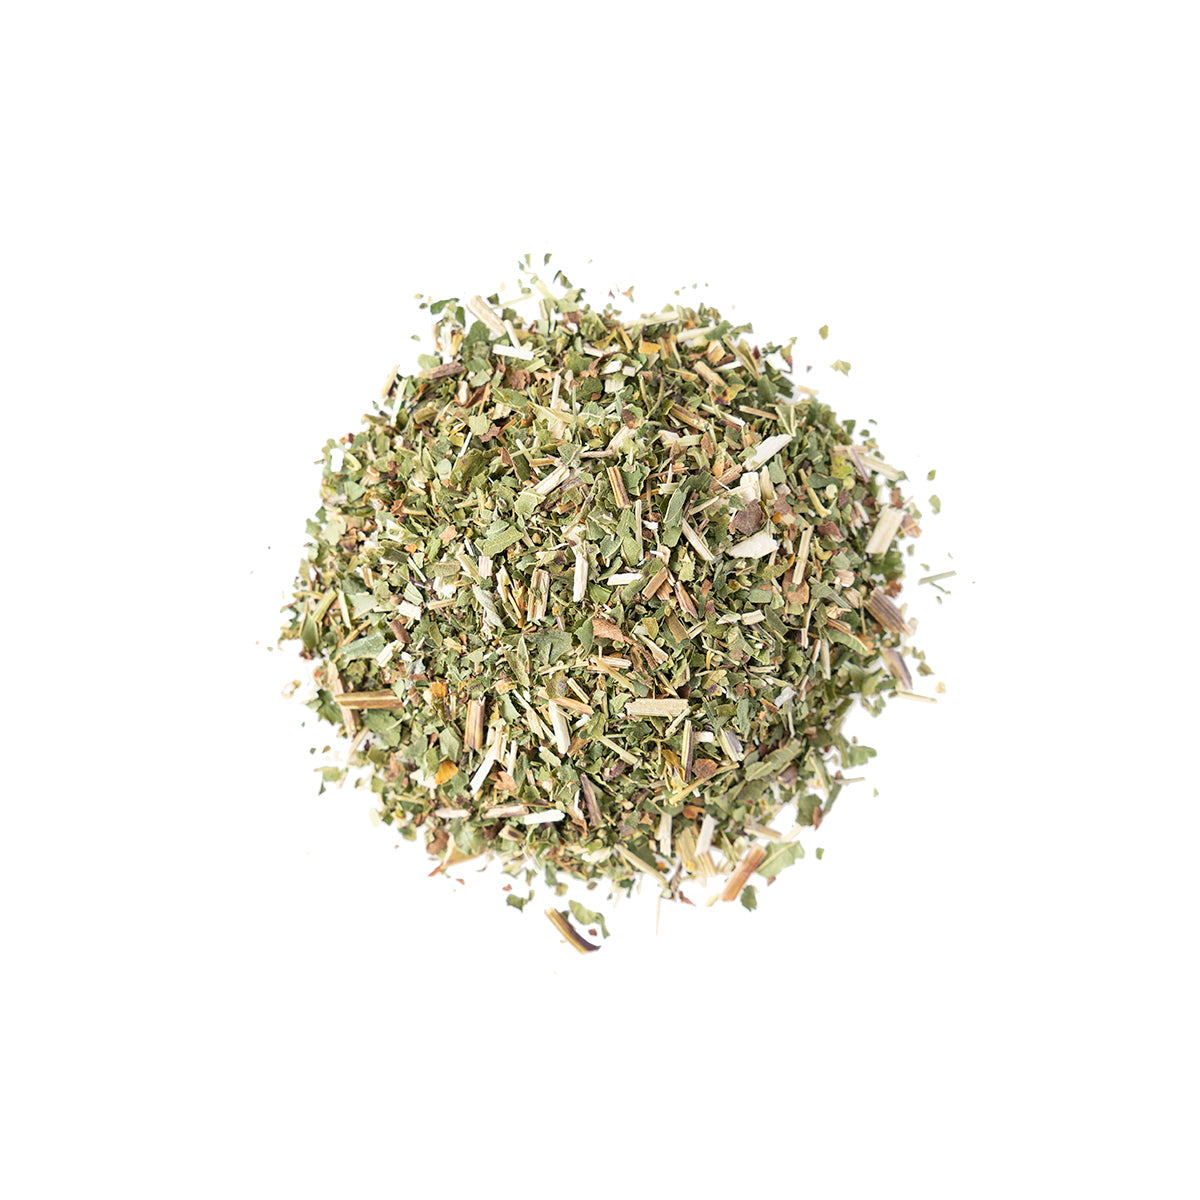 Primary Image of Meadowsweet Herb - Cut (Filipendula ulmaria)